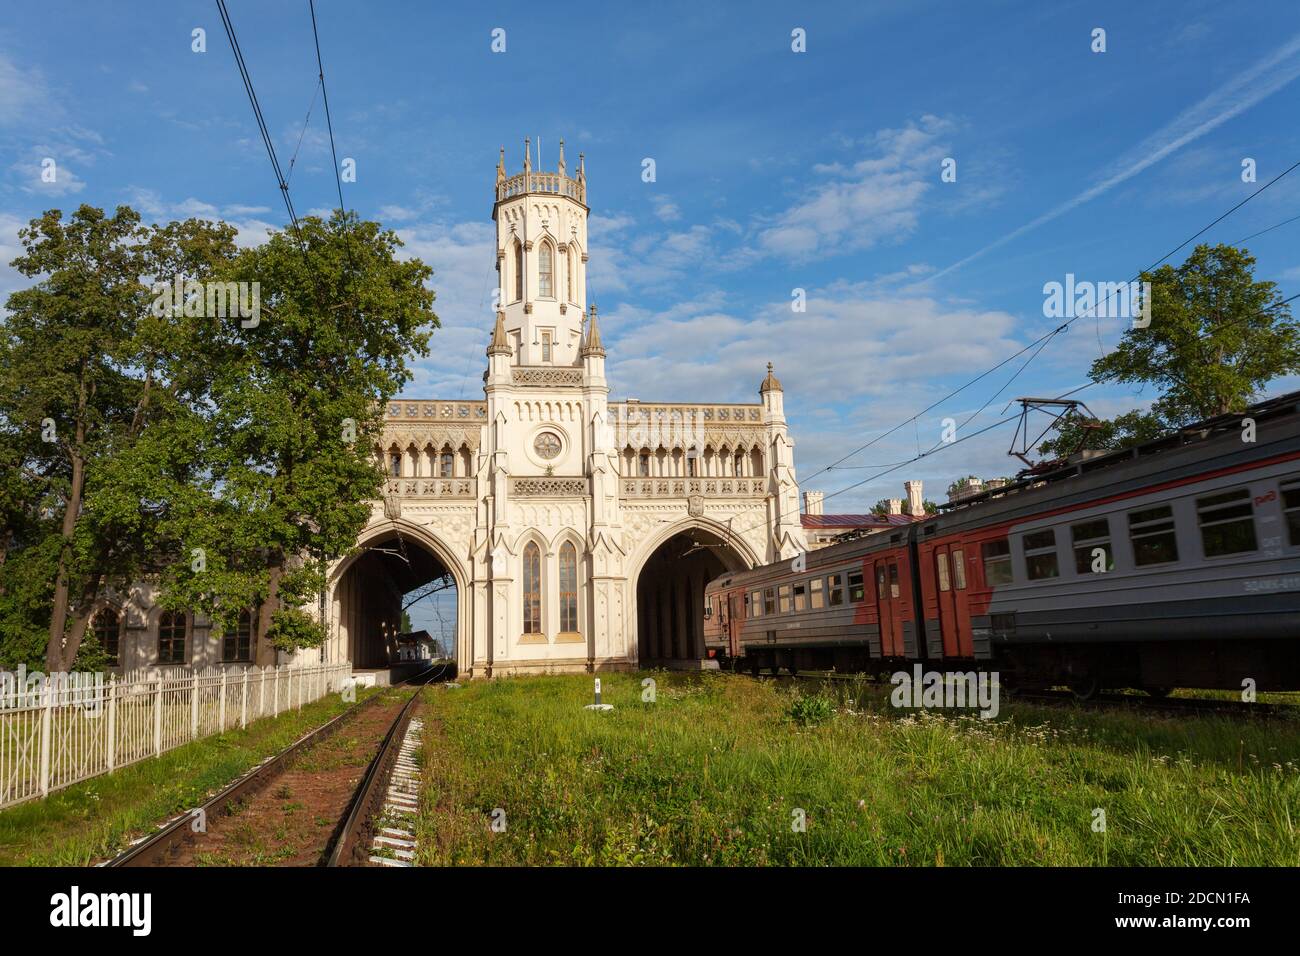 New Peterhof Railway Station, Petergof, St. Petersburg, Russia. Stock Photo